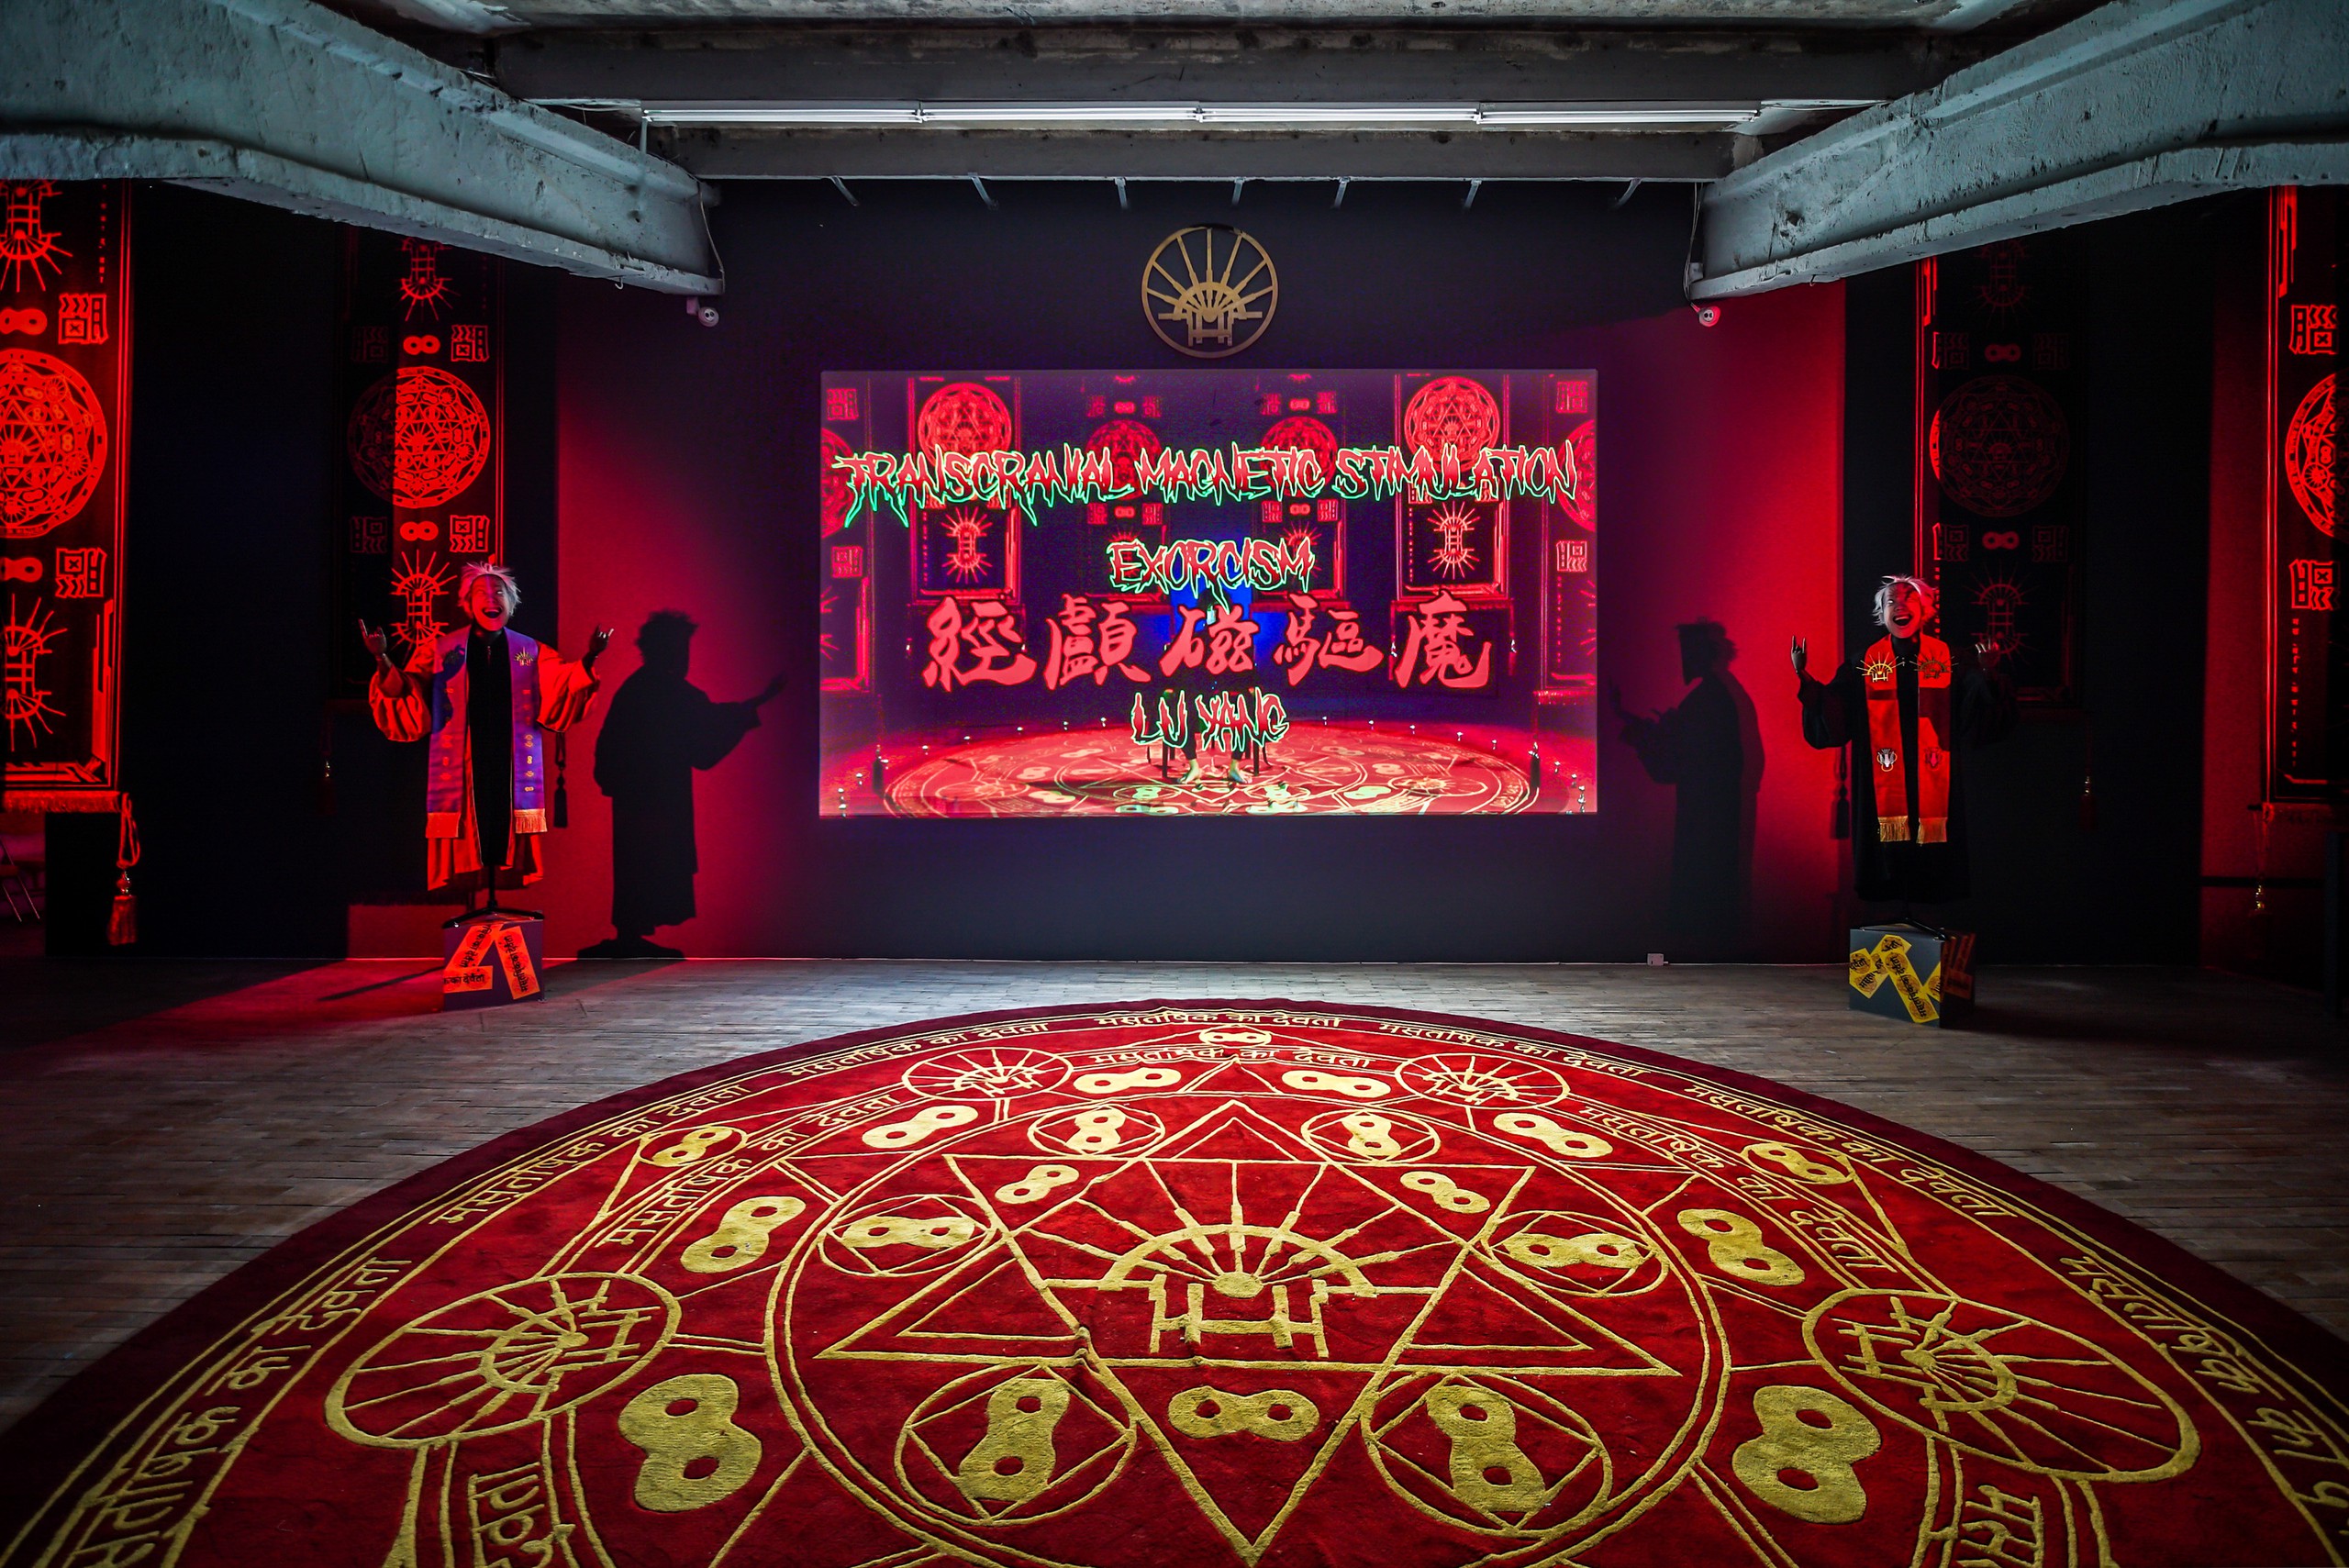 Installation view, Encephalon Heaven, M WOODS, Beijing, 2017